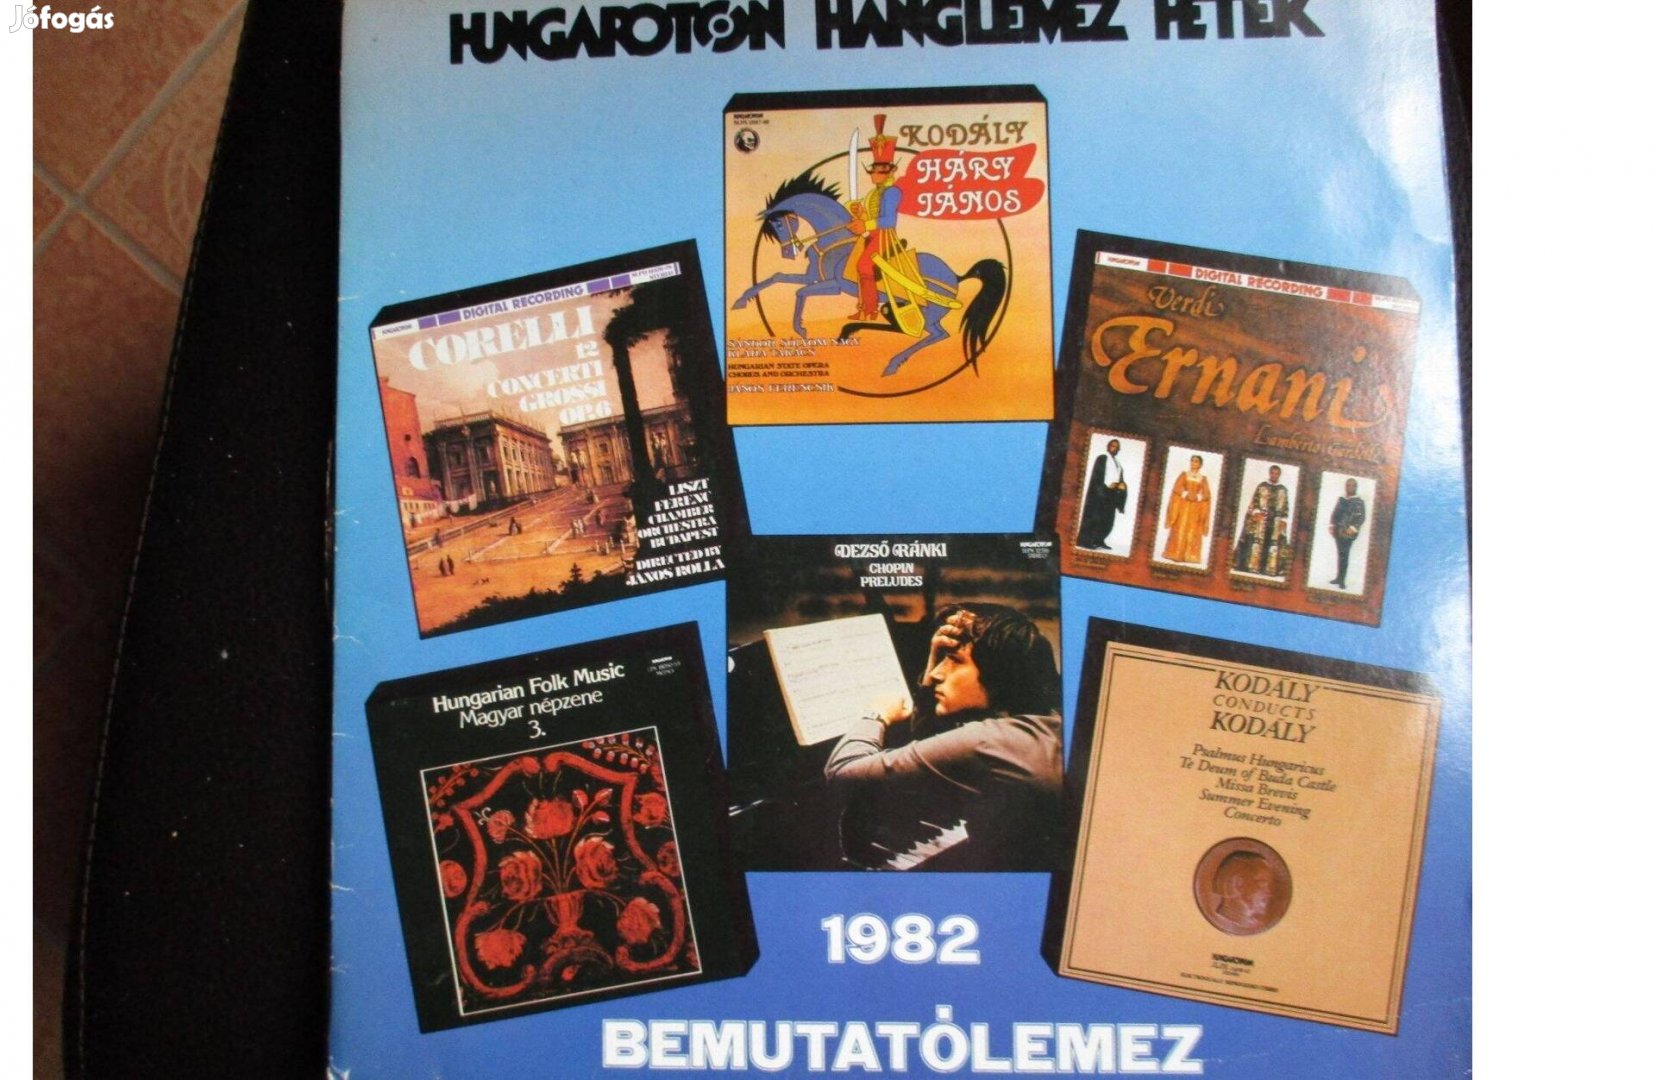 Hungaroton hanglemez hetek bemutatólemez eladó